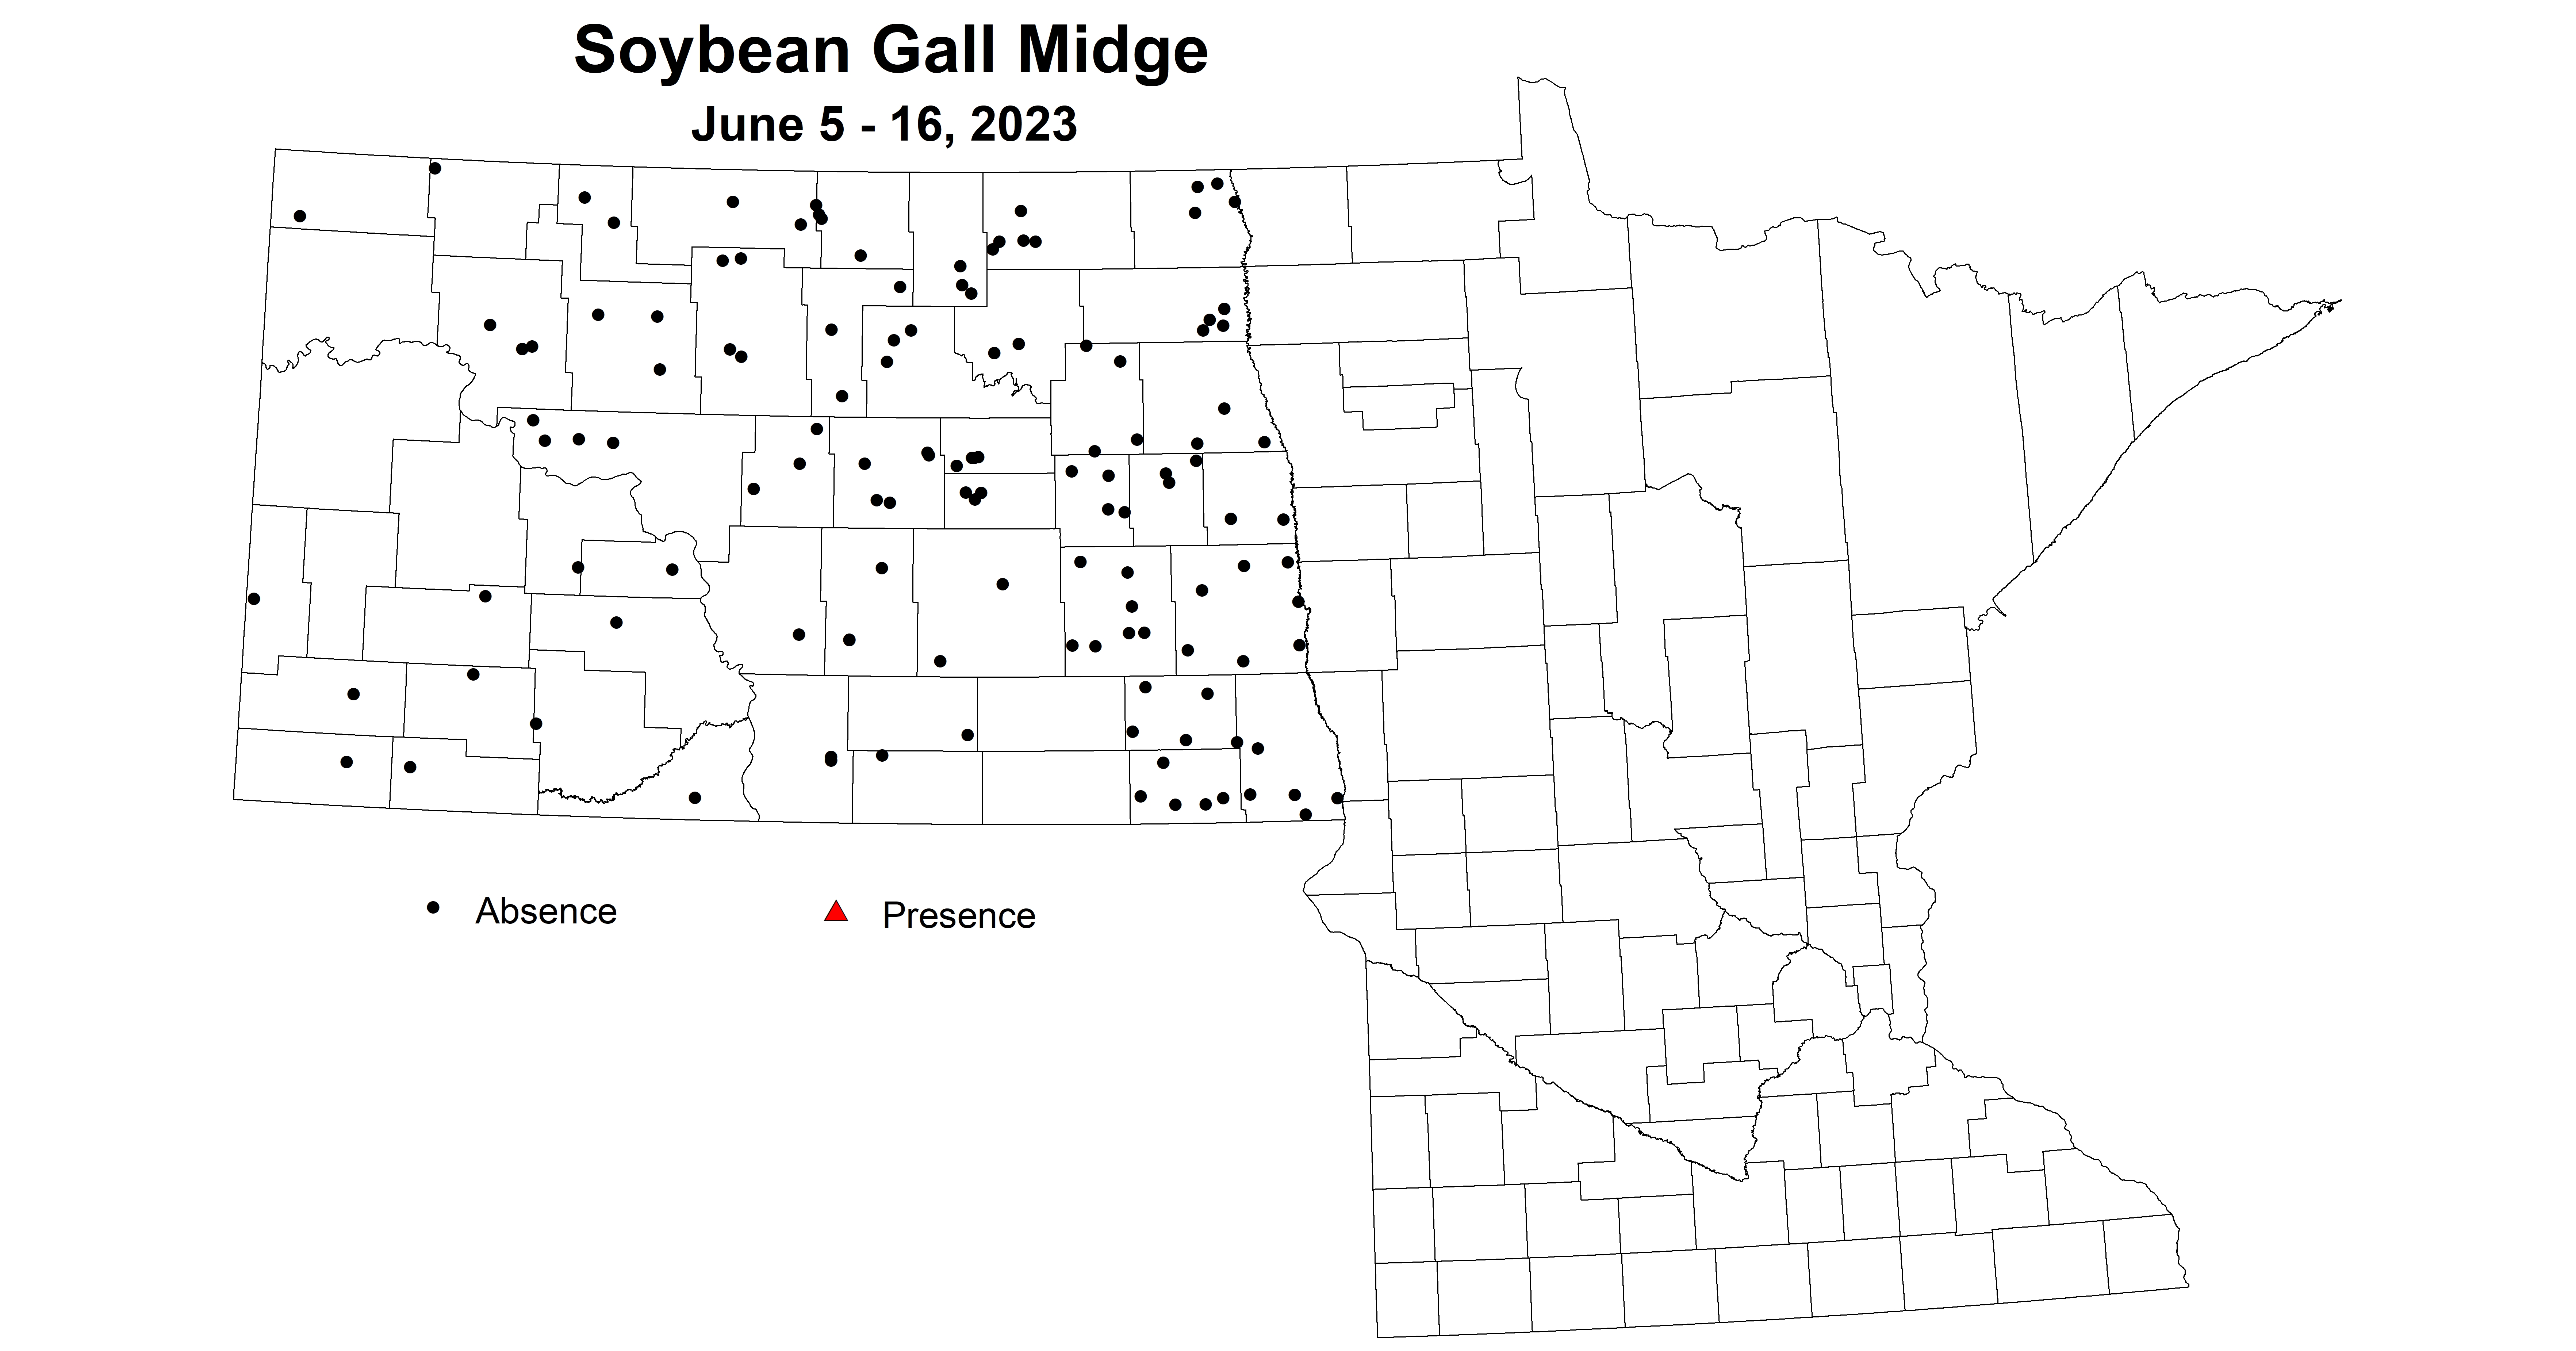 soybean gall midge June 5-16 2023